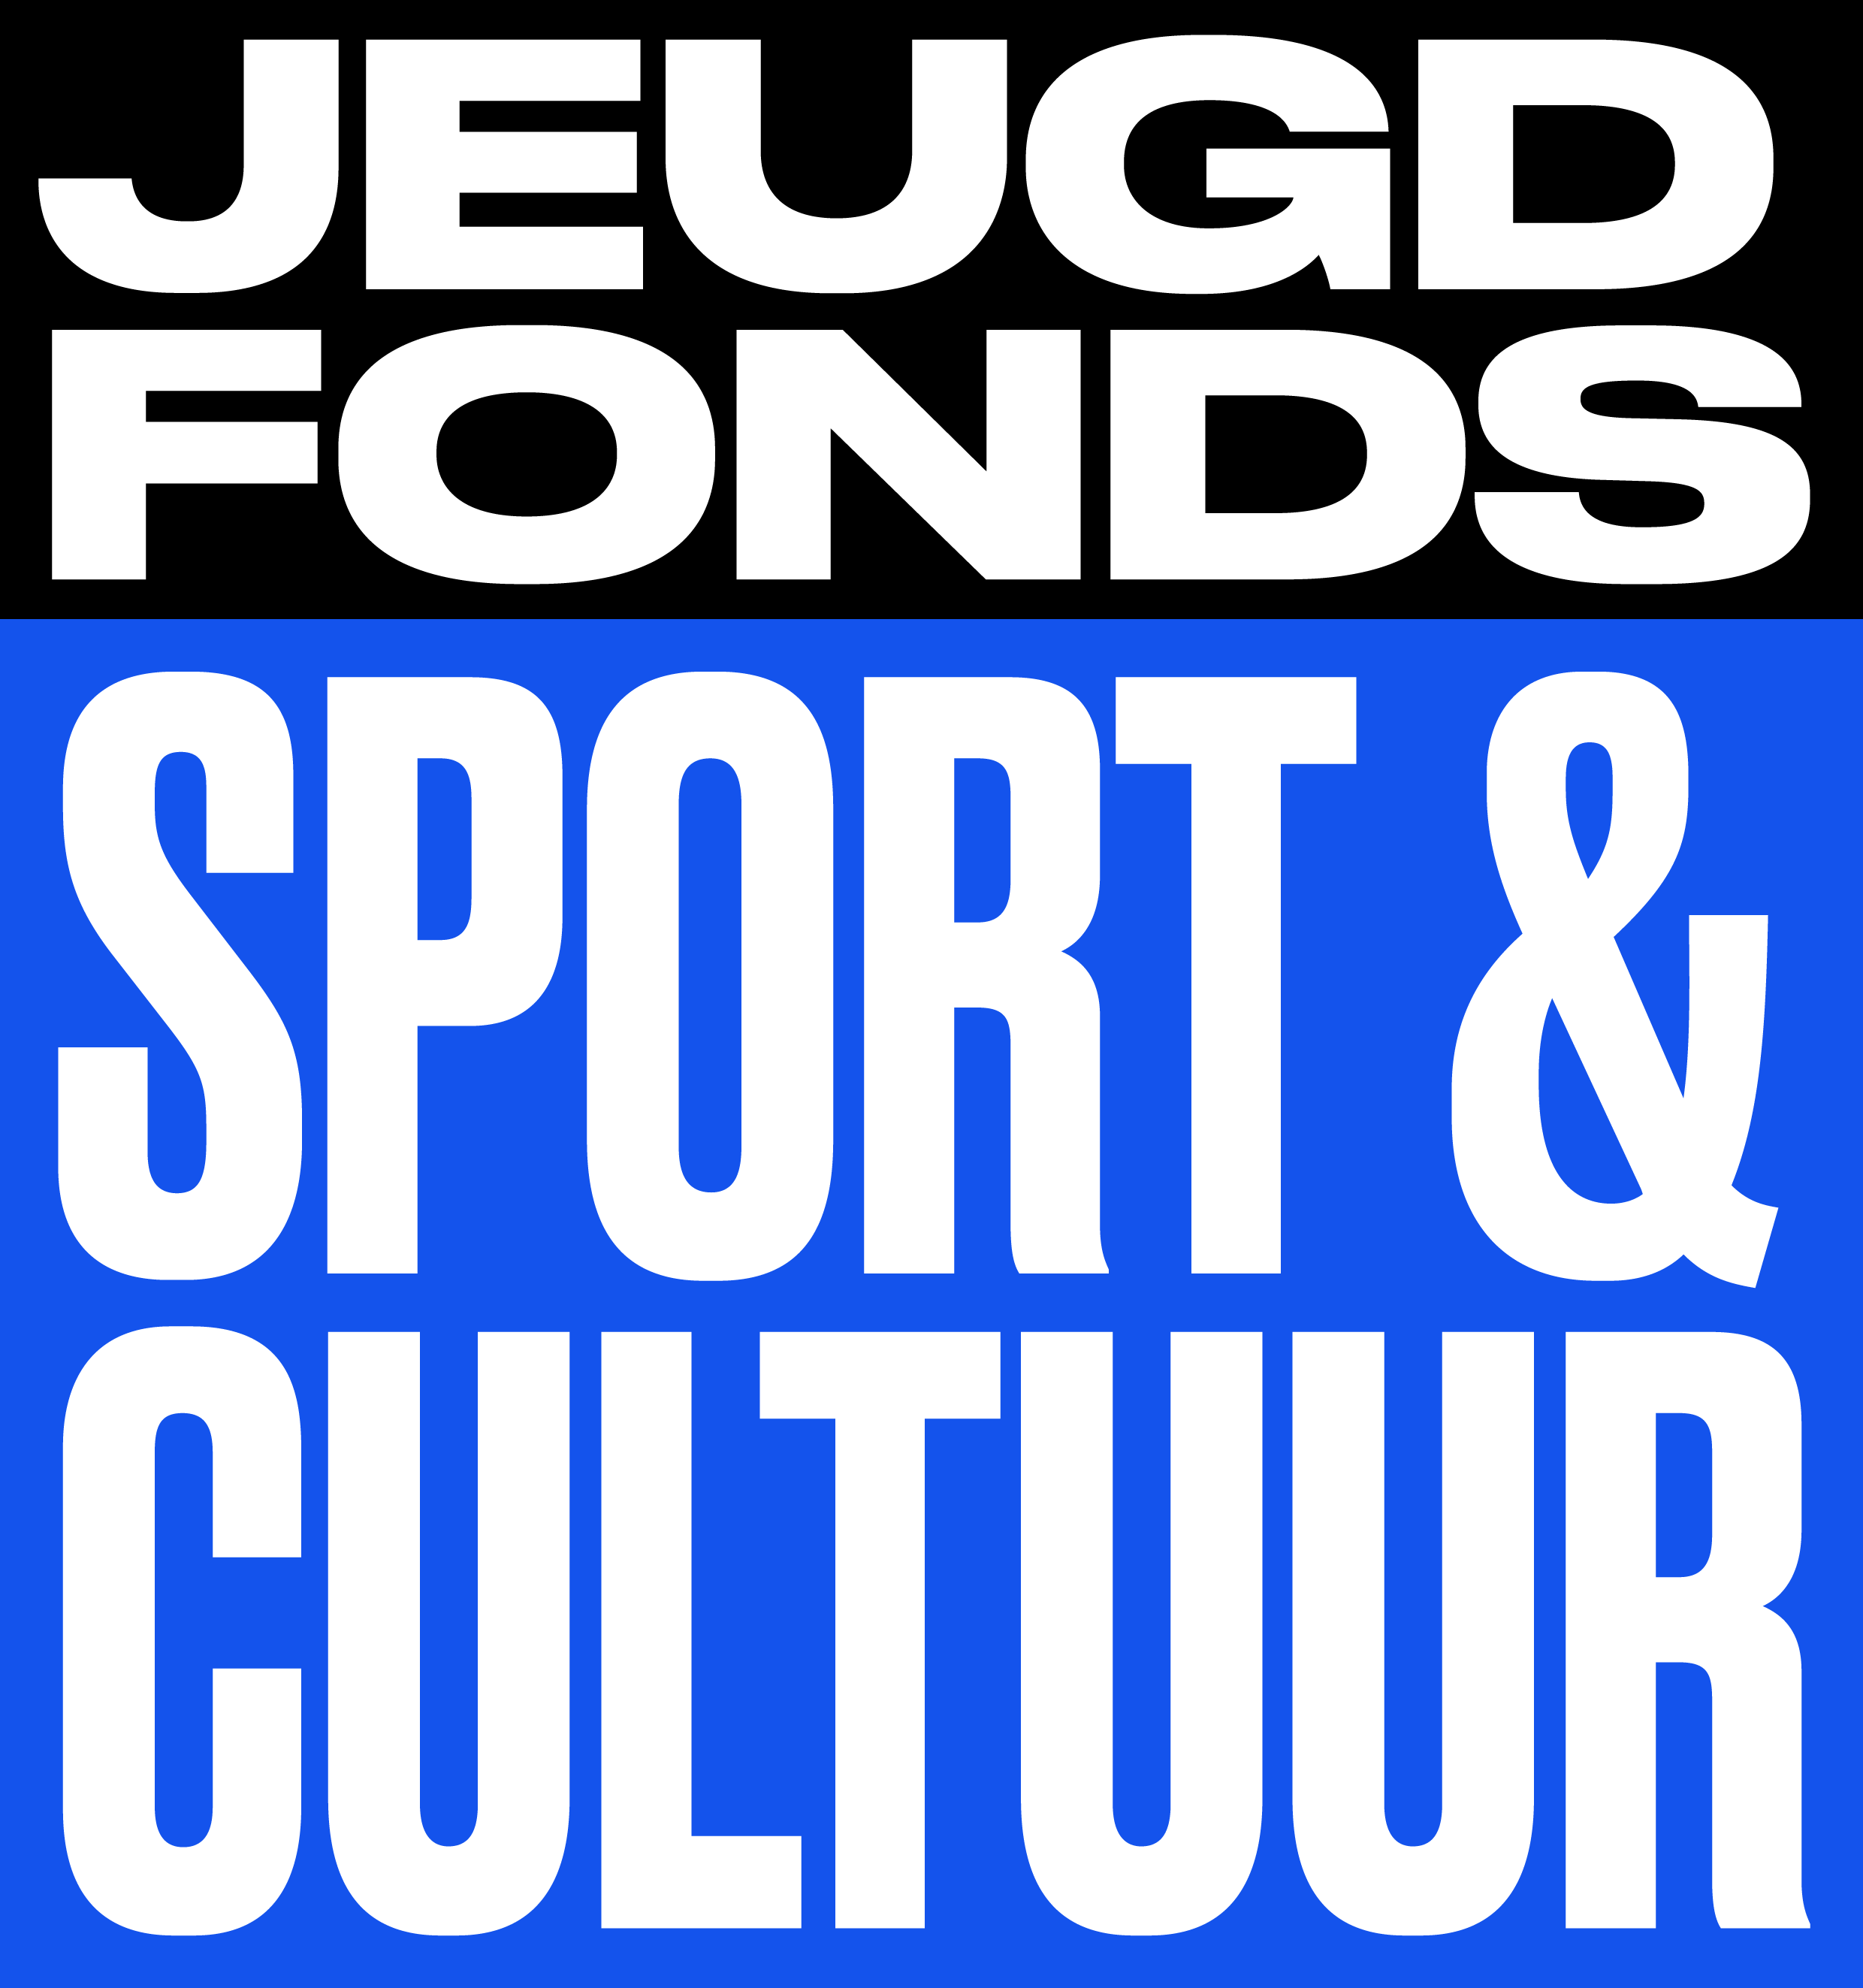 Voor wie? | Jeugdfonds Sport & Cultuur